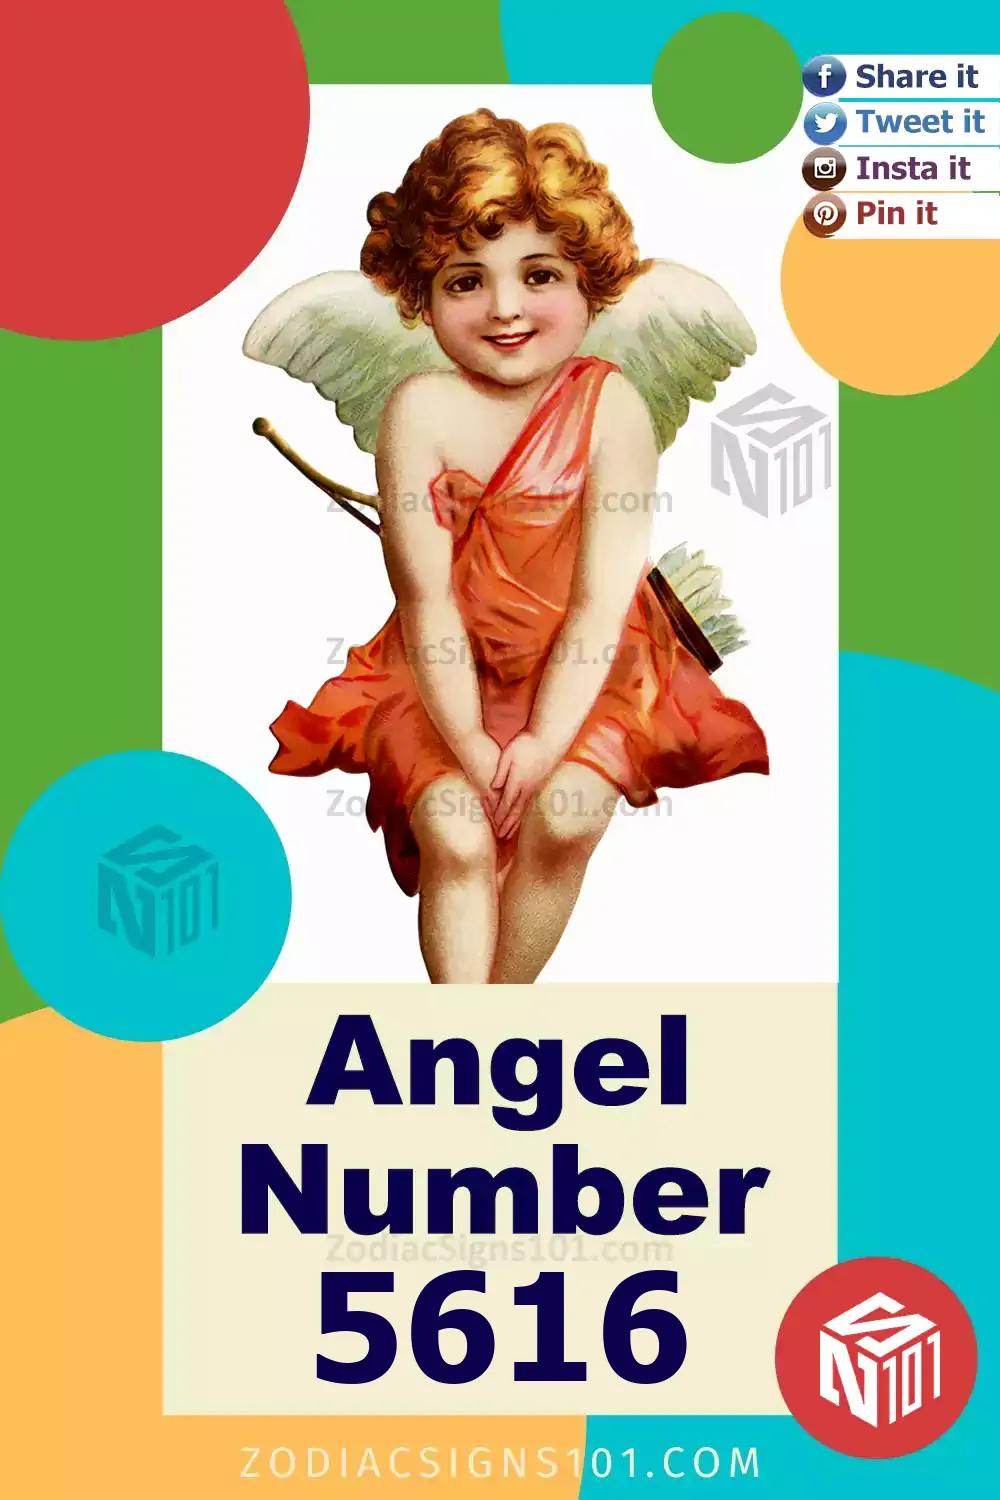 5616-Angel-Number-Meaning.jpg